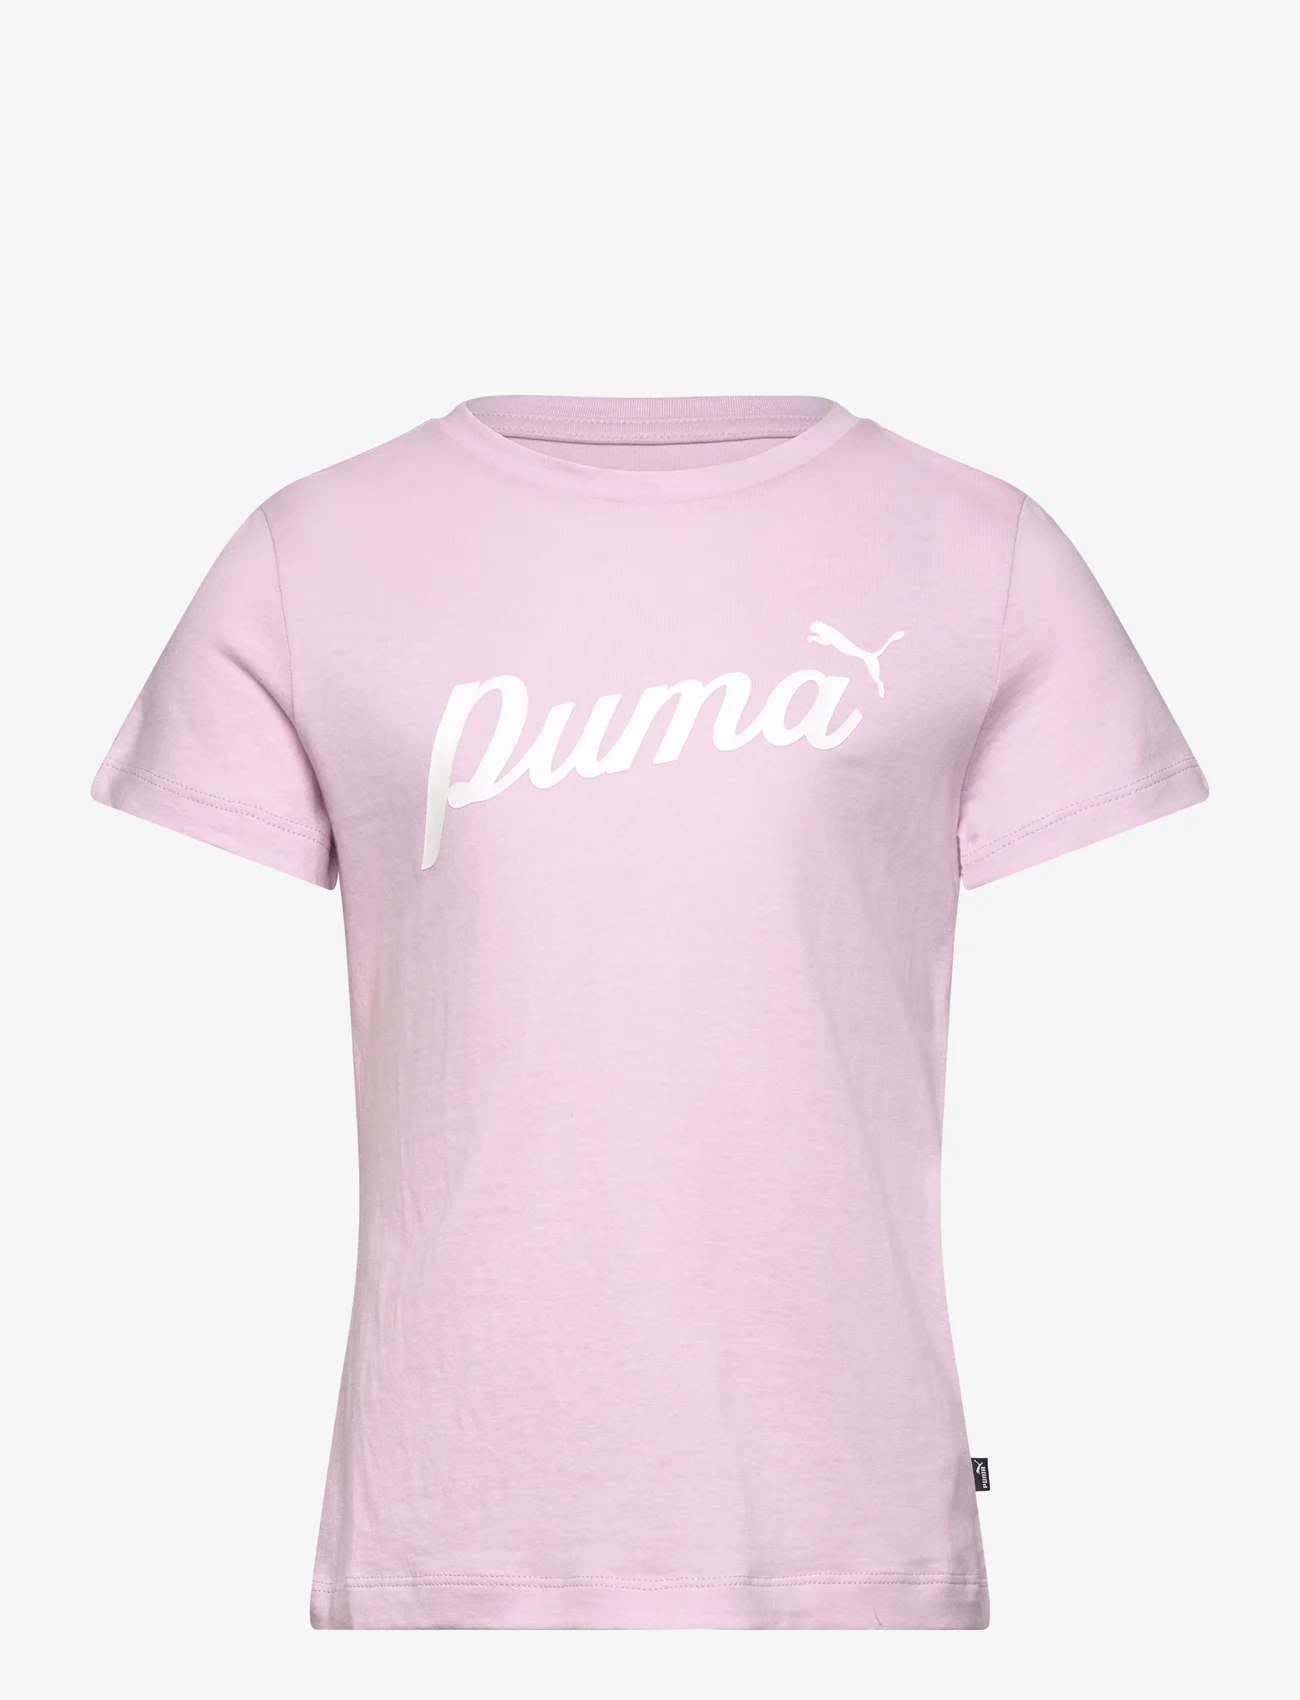 PUMA - ESS+ Script Tee G - short-sleeved t-shirts - grape mist - 0